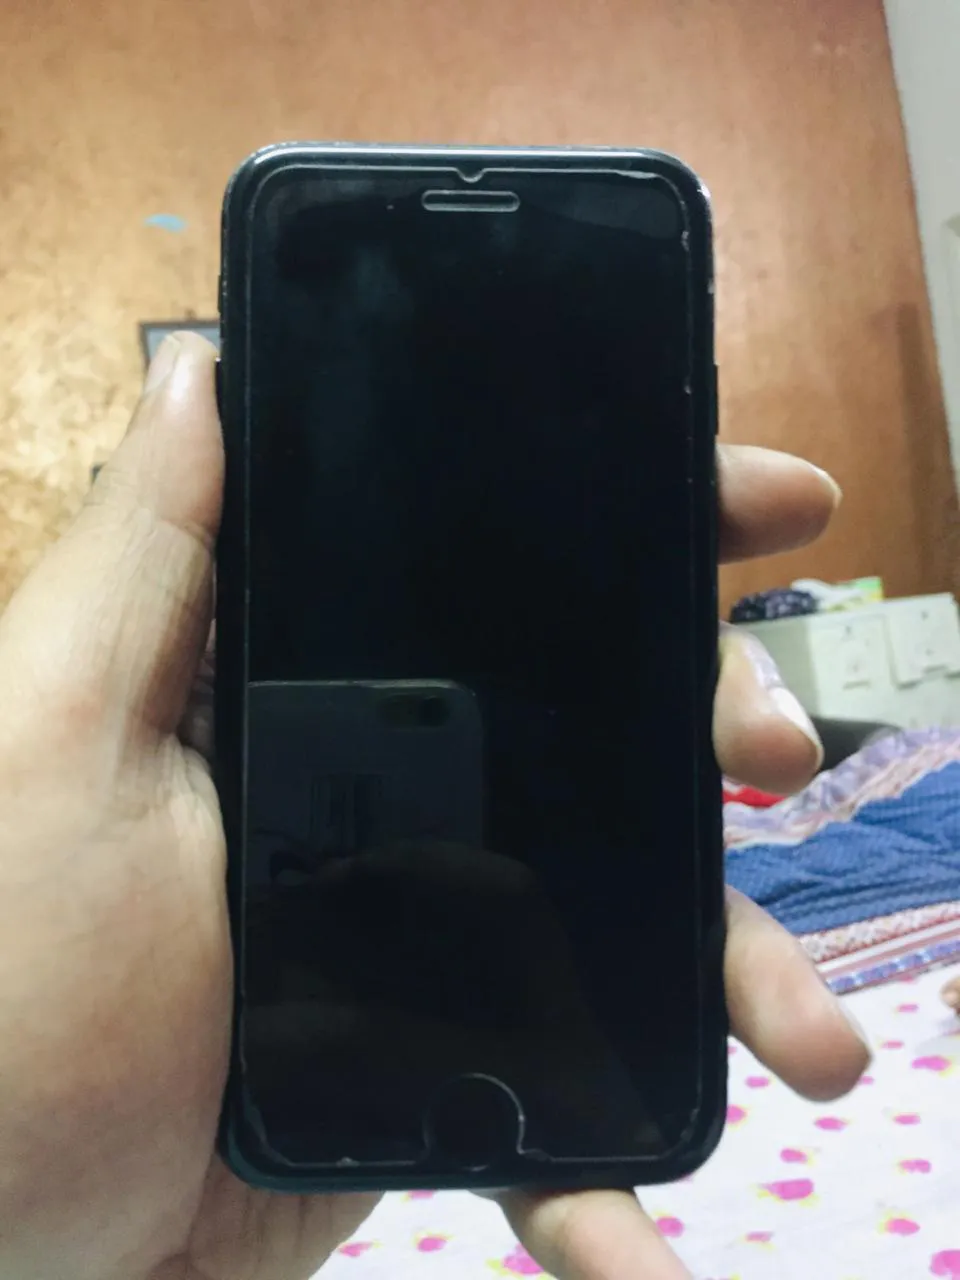 iPhone 7 32 gb no fault - photo 1